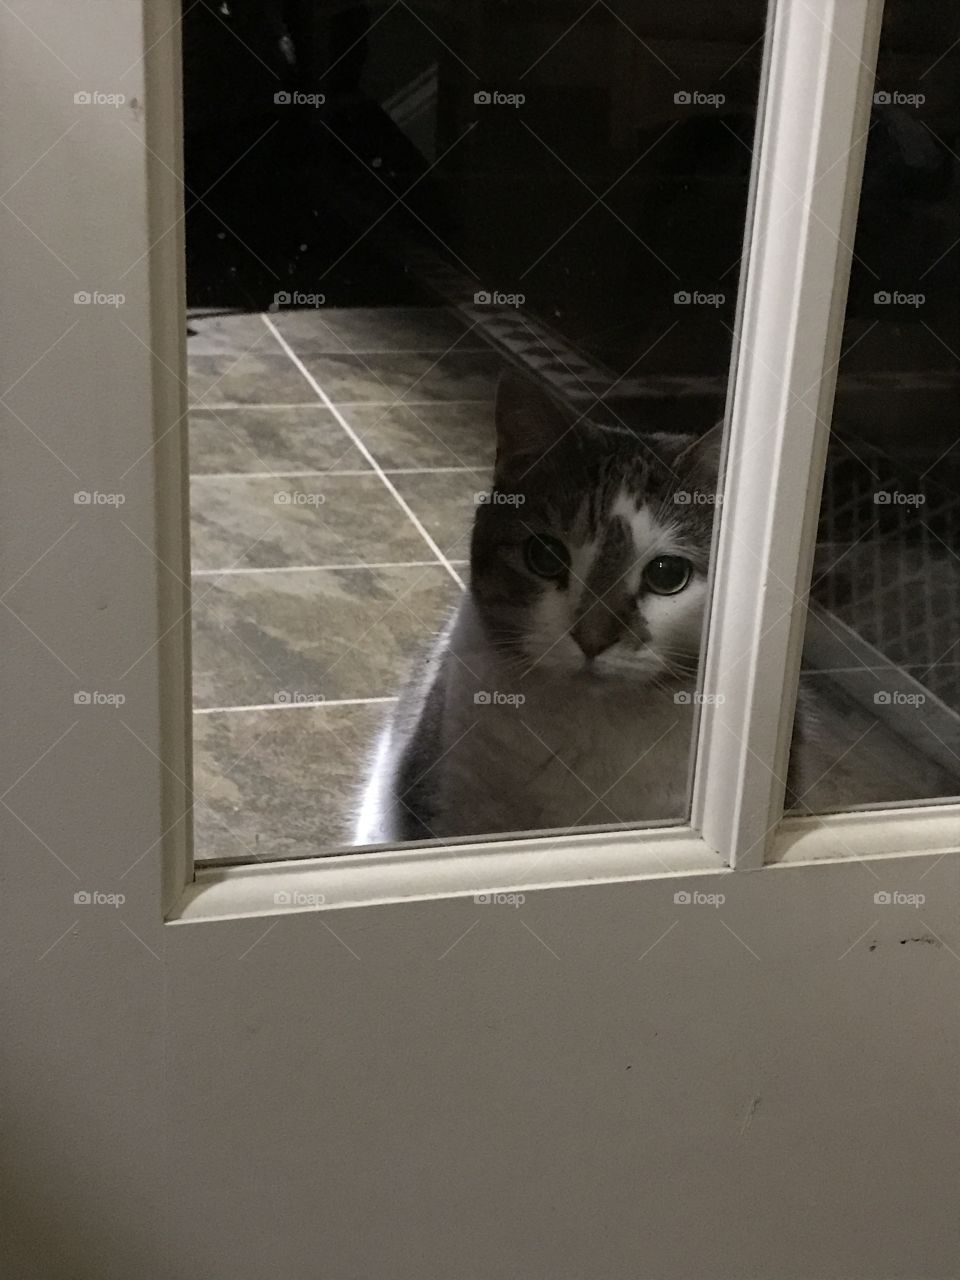 Please let me in?